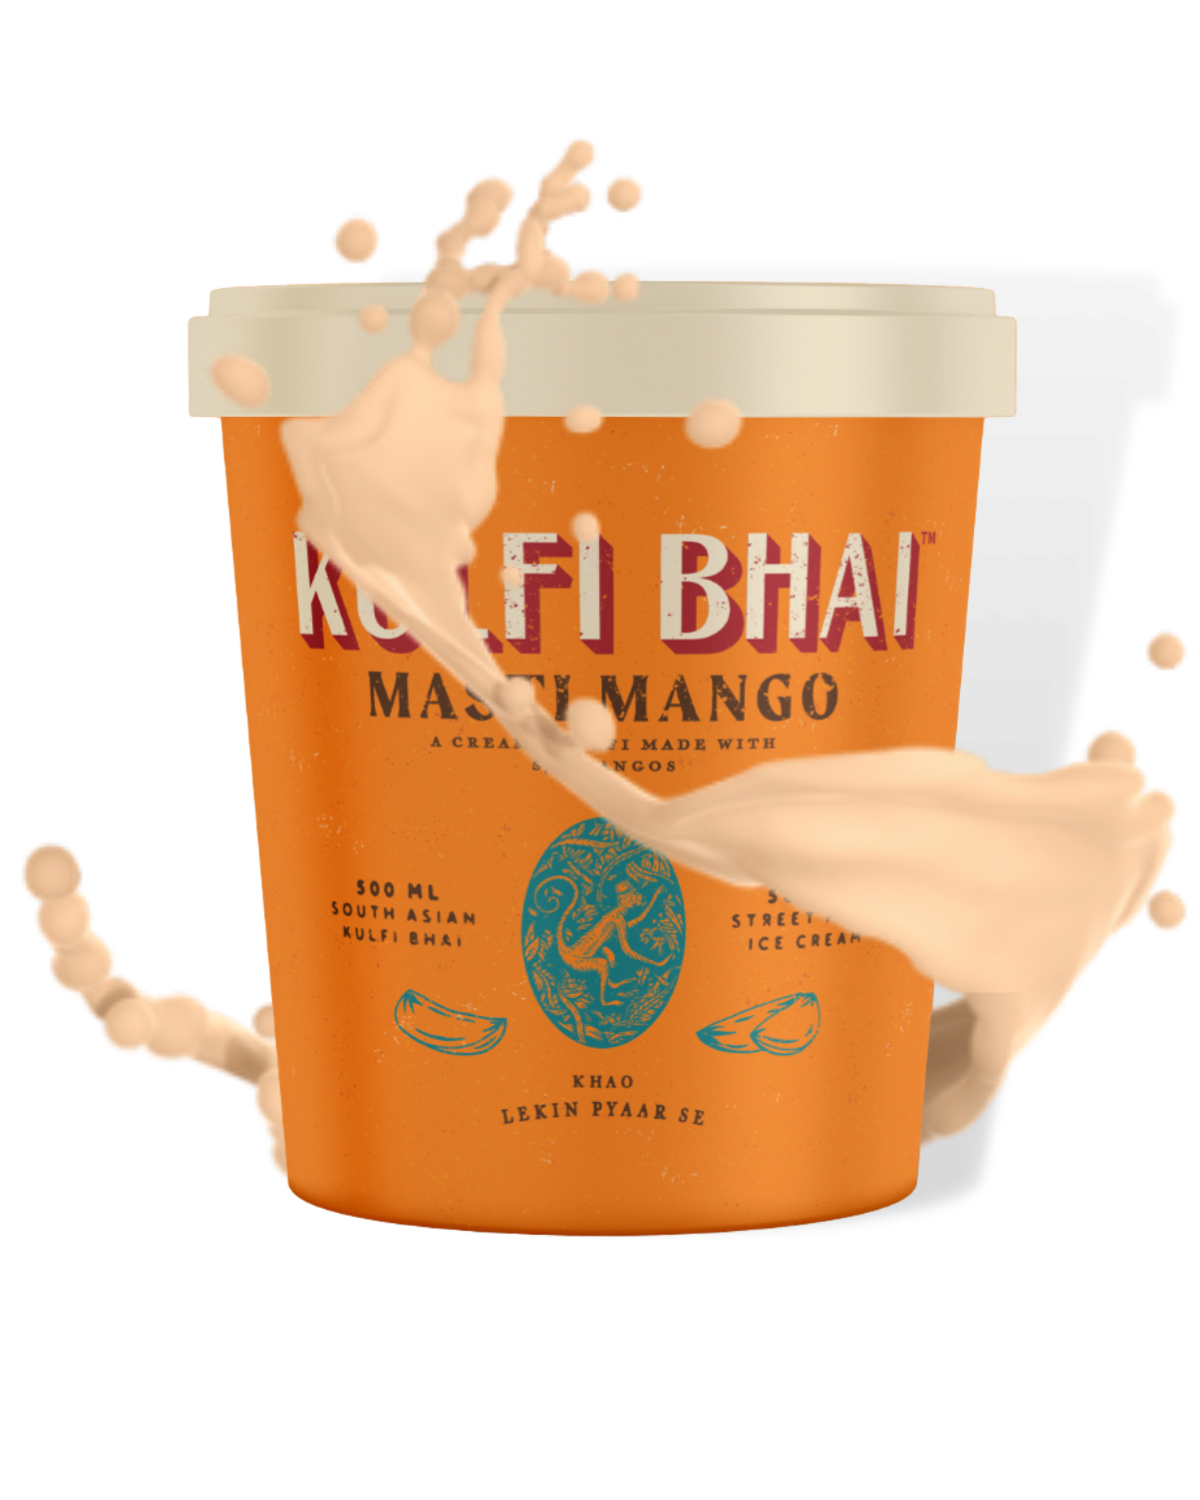 Kulfi Bhai Masti Mango-South Asian Dessert-Street Food Ice Cream -Creamy Kulfi